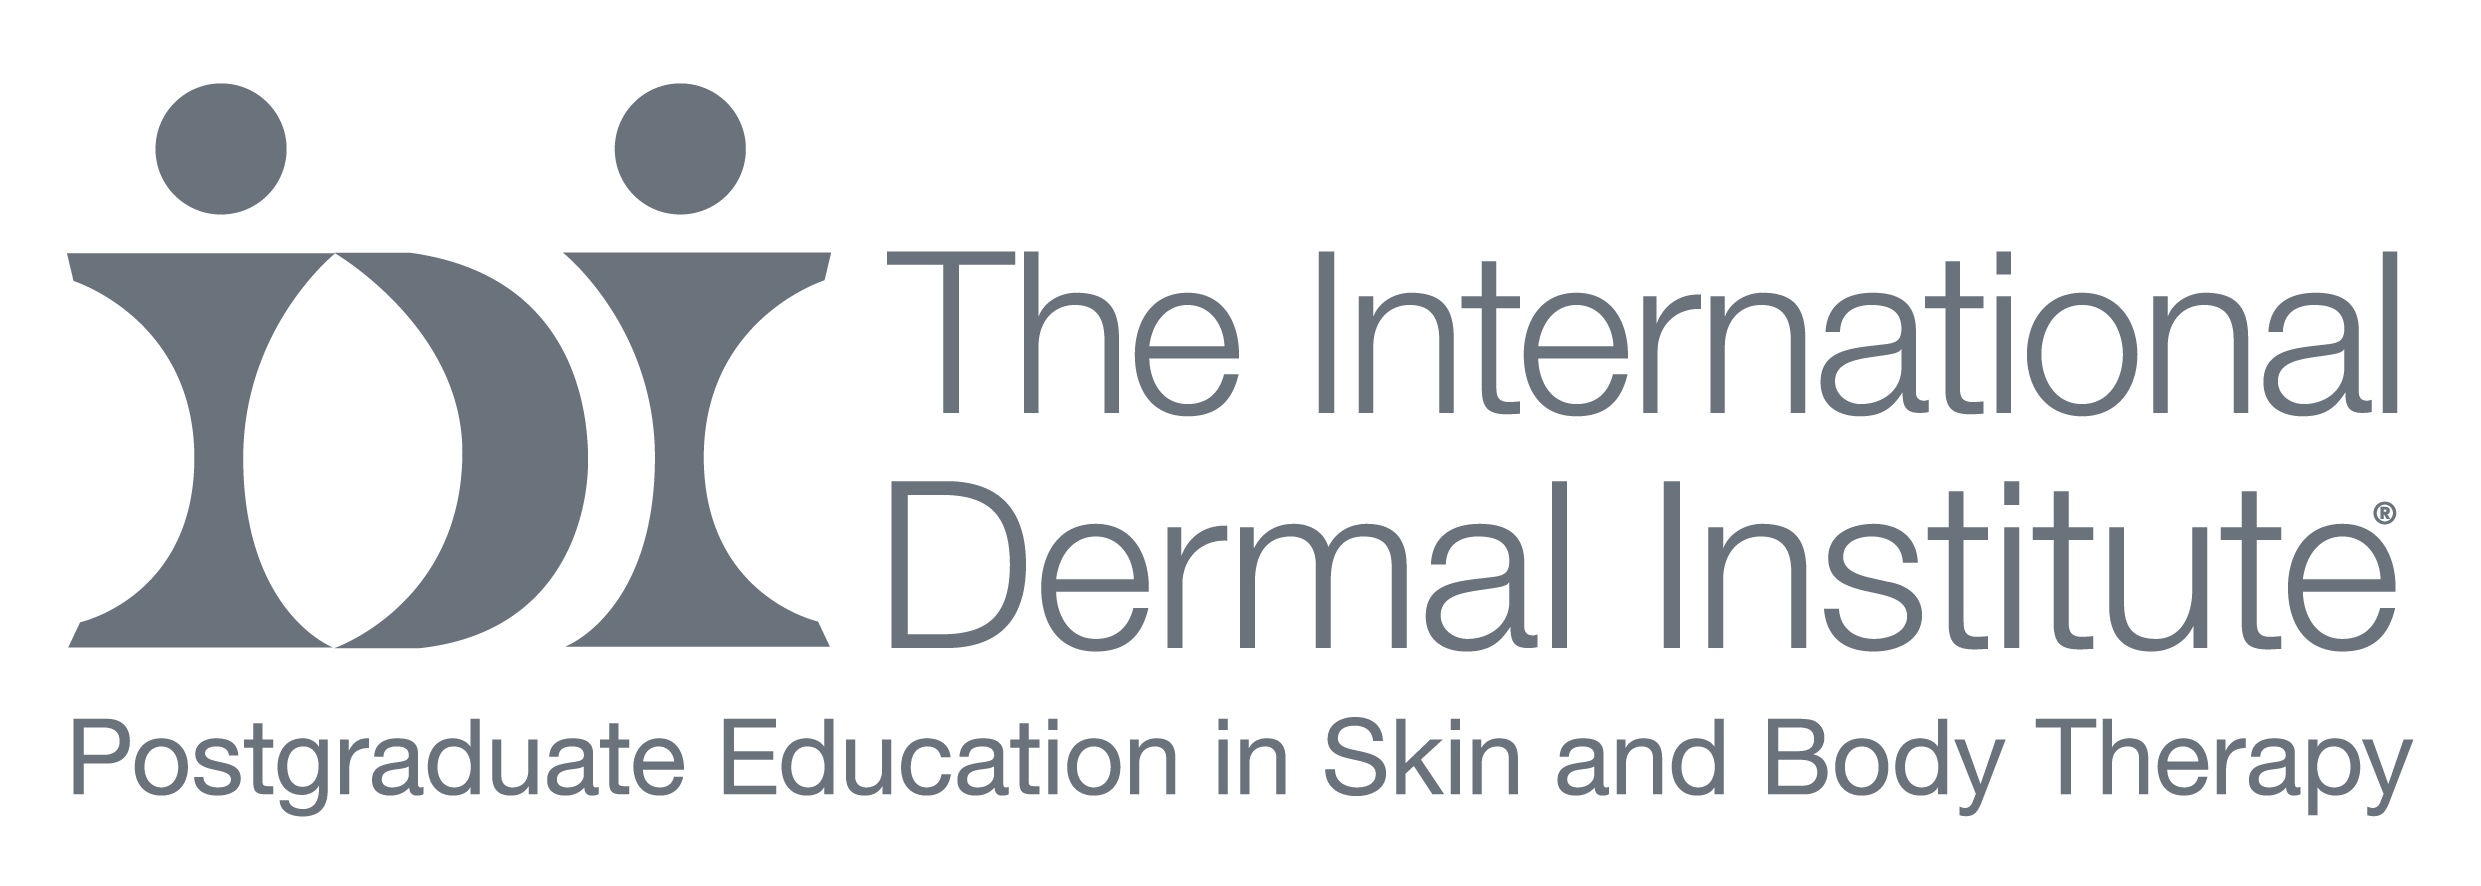  The International Dermal Institute